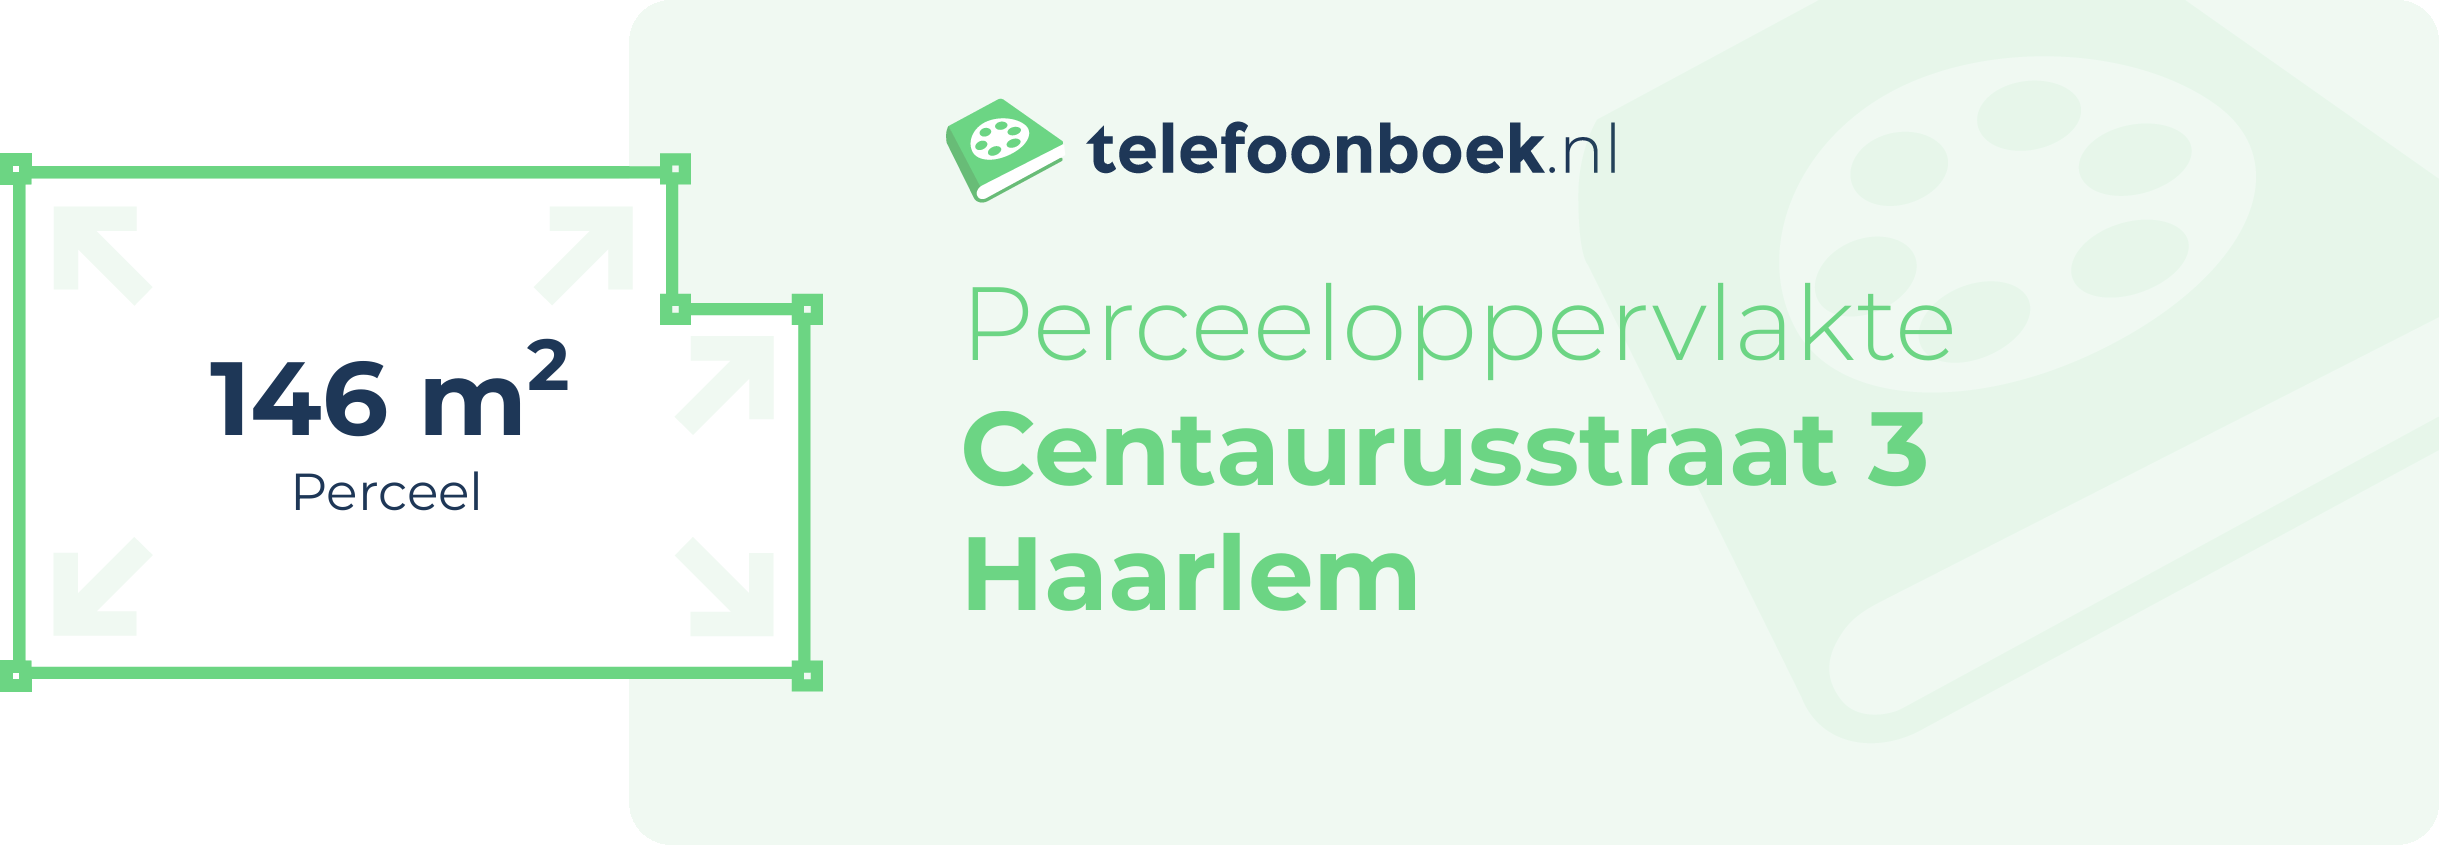 Perceeloppervlakte Centaurusstraat 3 Haarlem